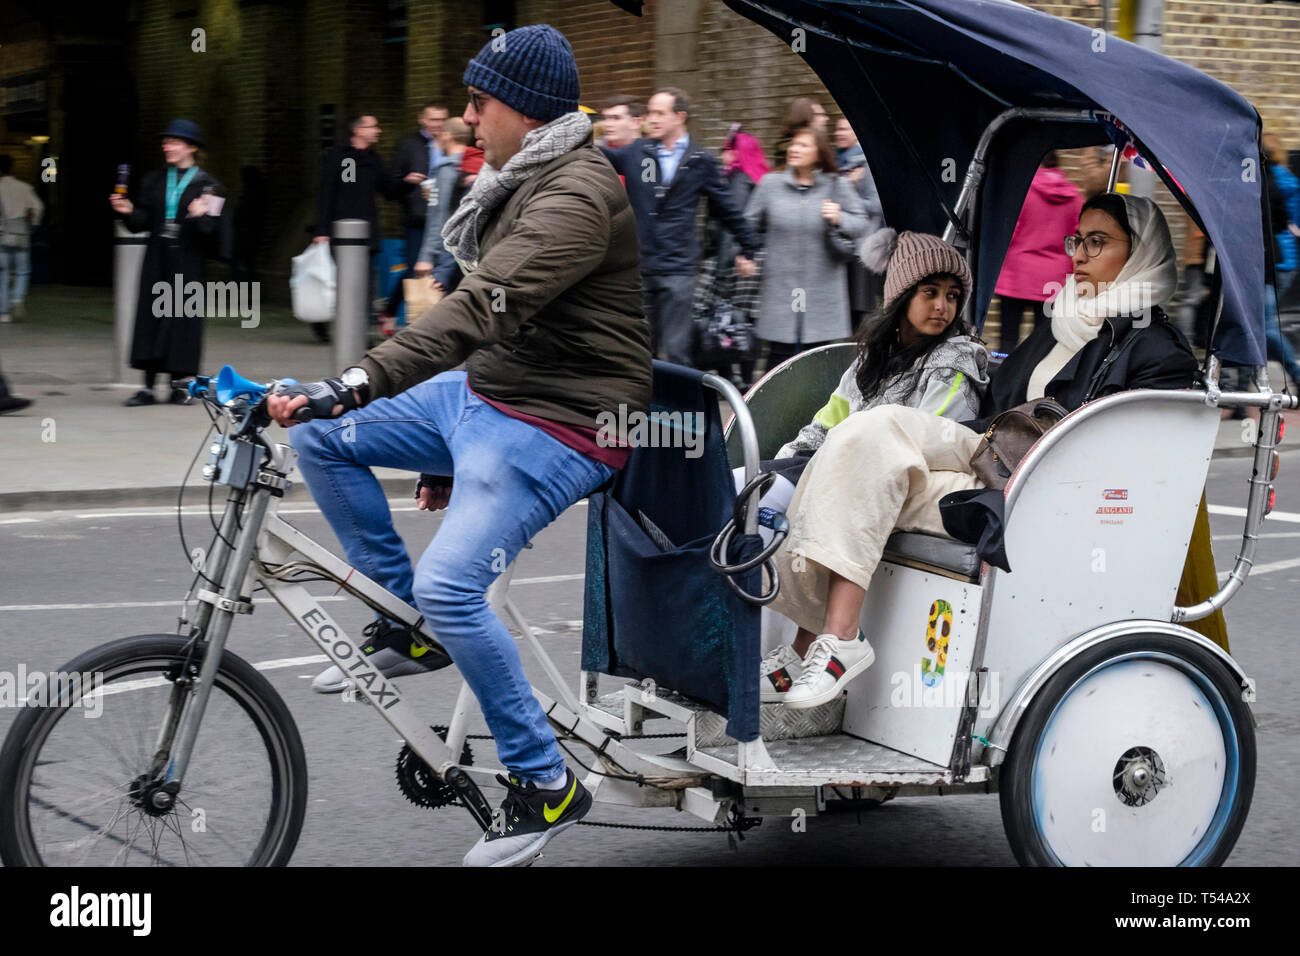 Cycle Rickshaw Taxi auf die London Street. Stockfoto